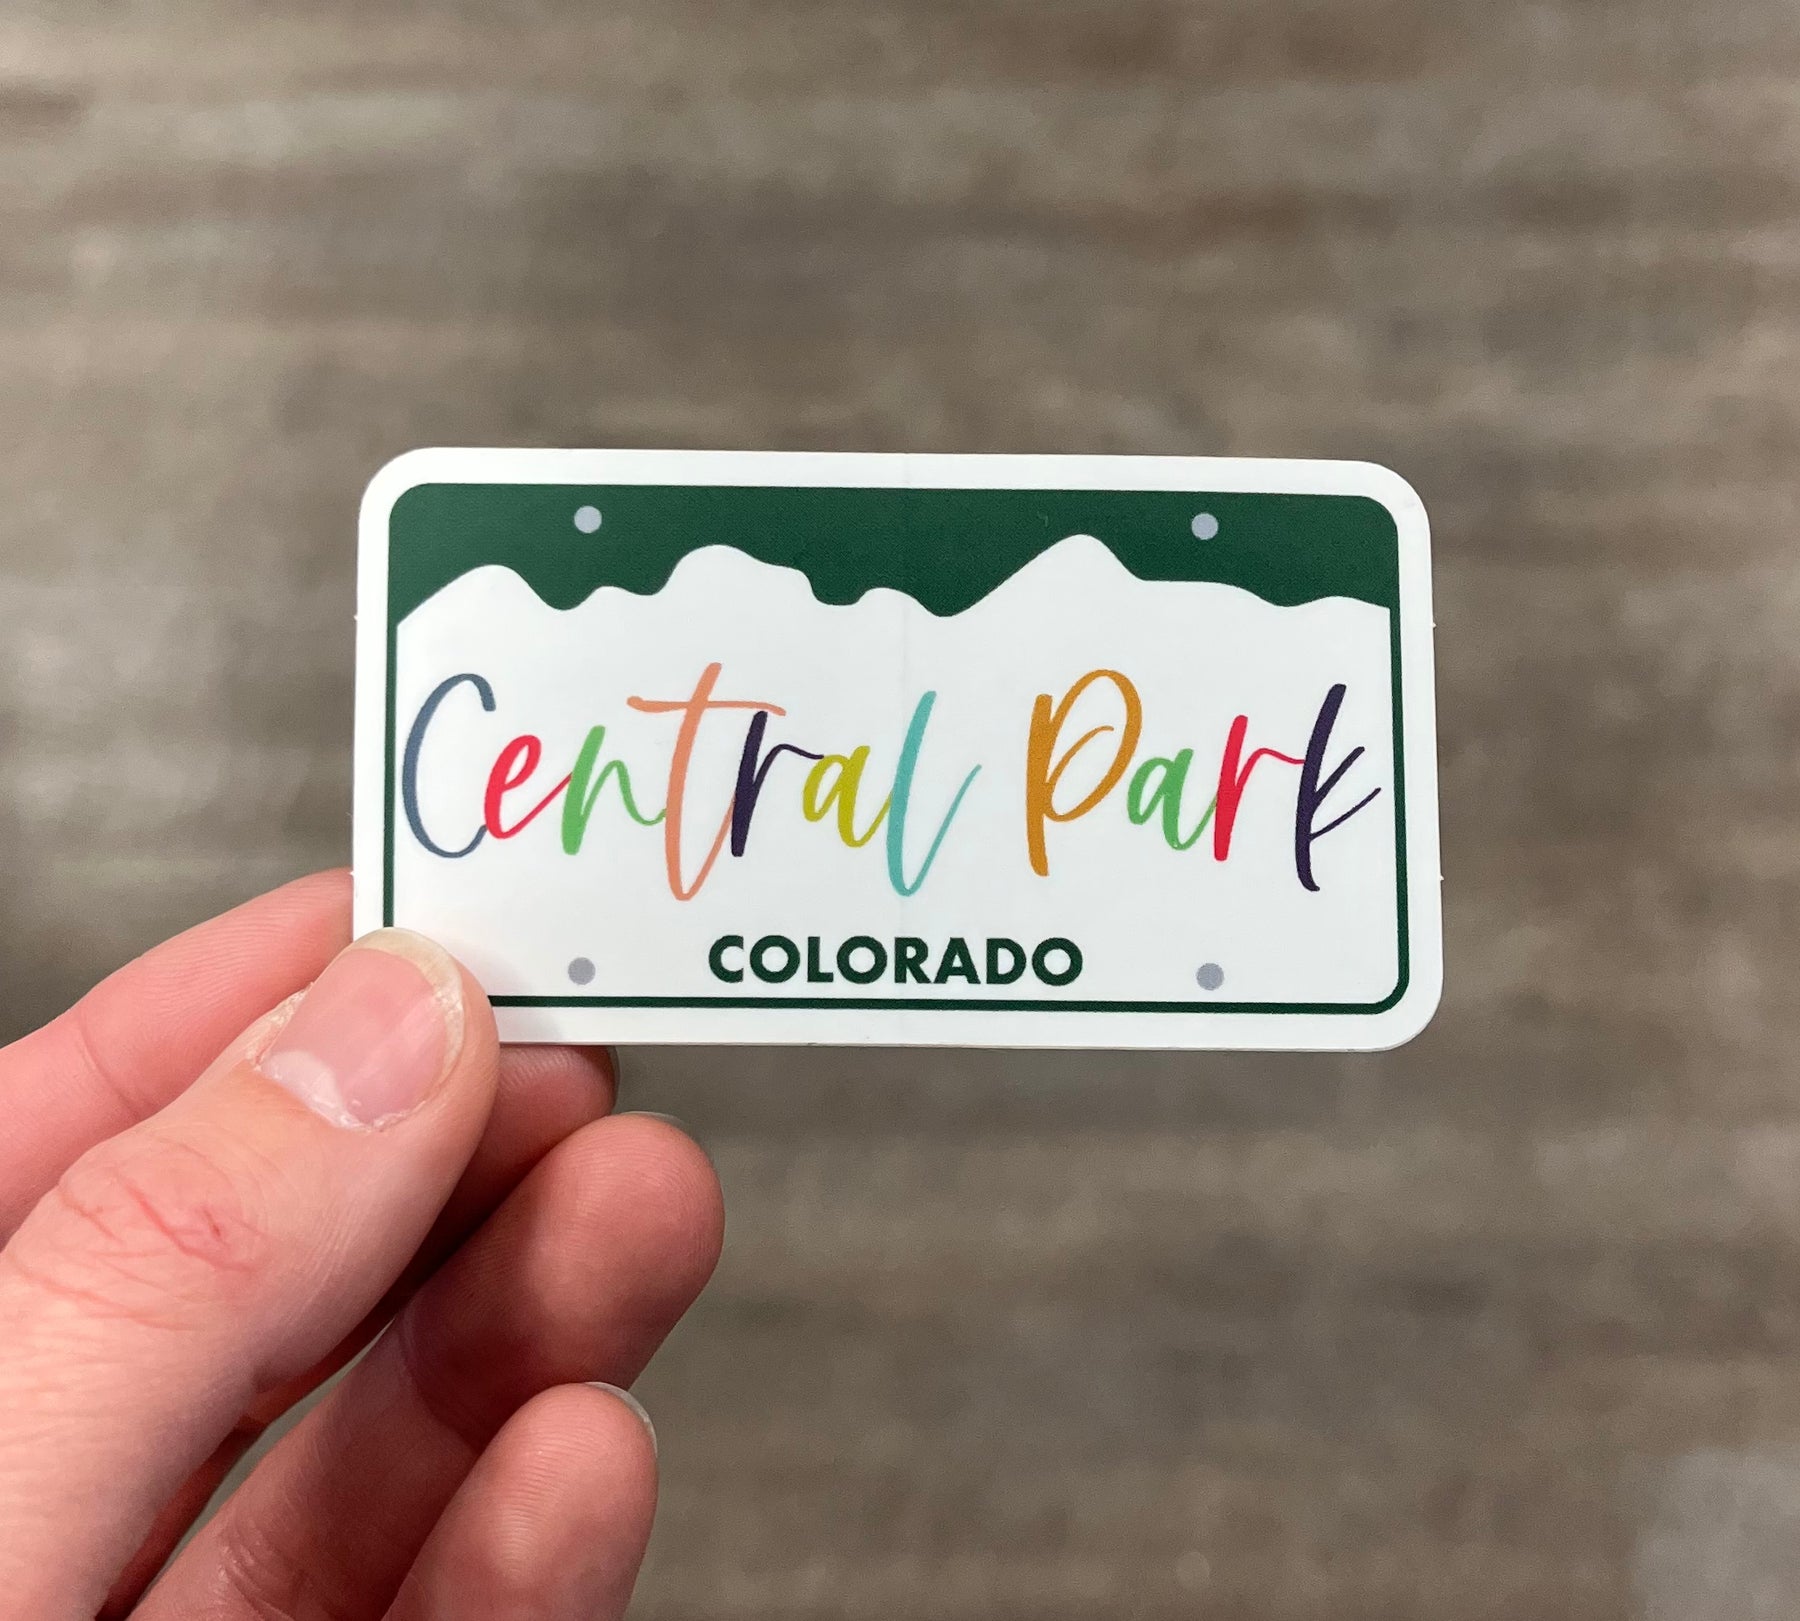 Central Park Colorado License Plate Sticker